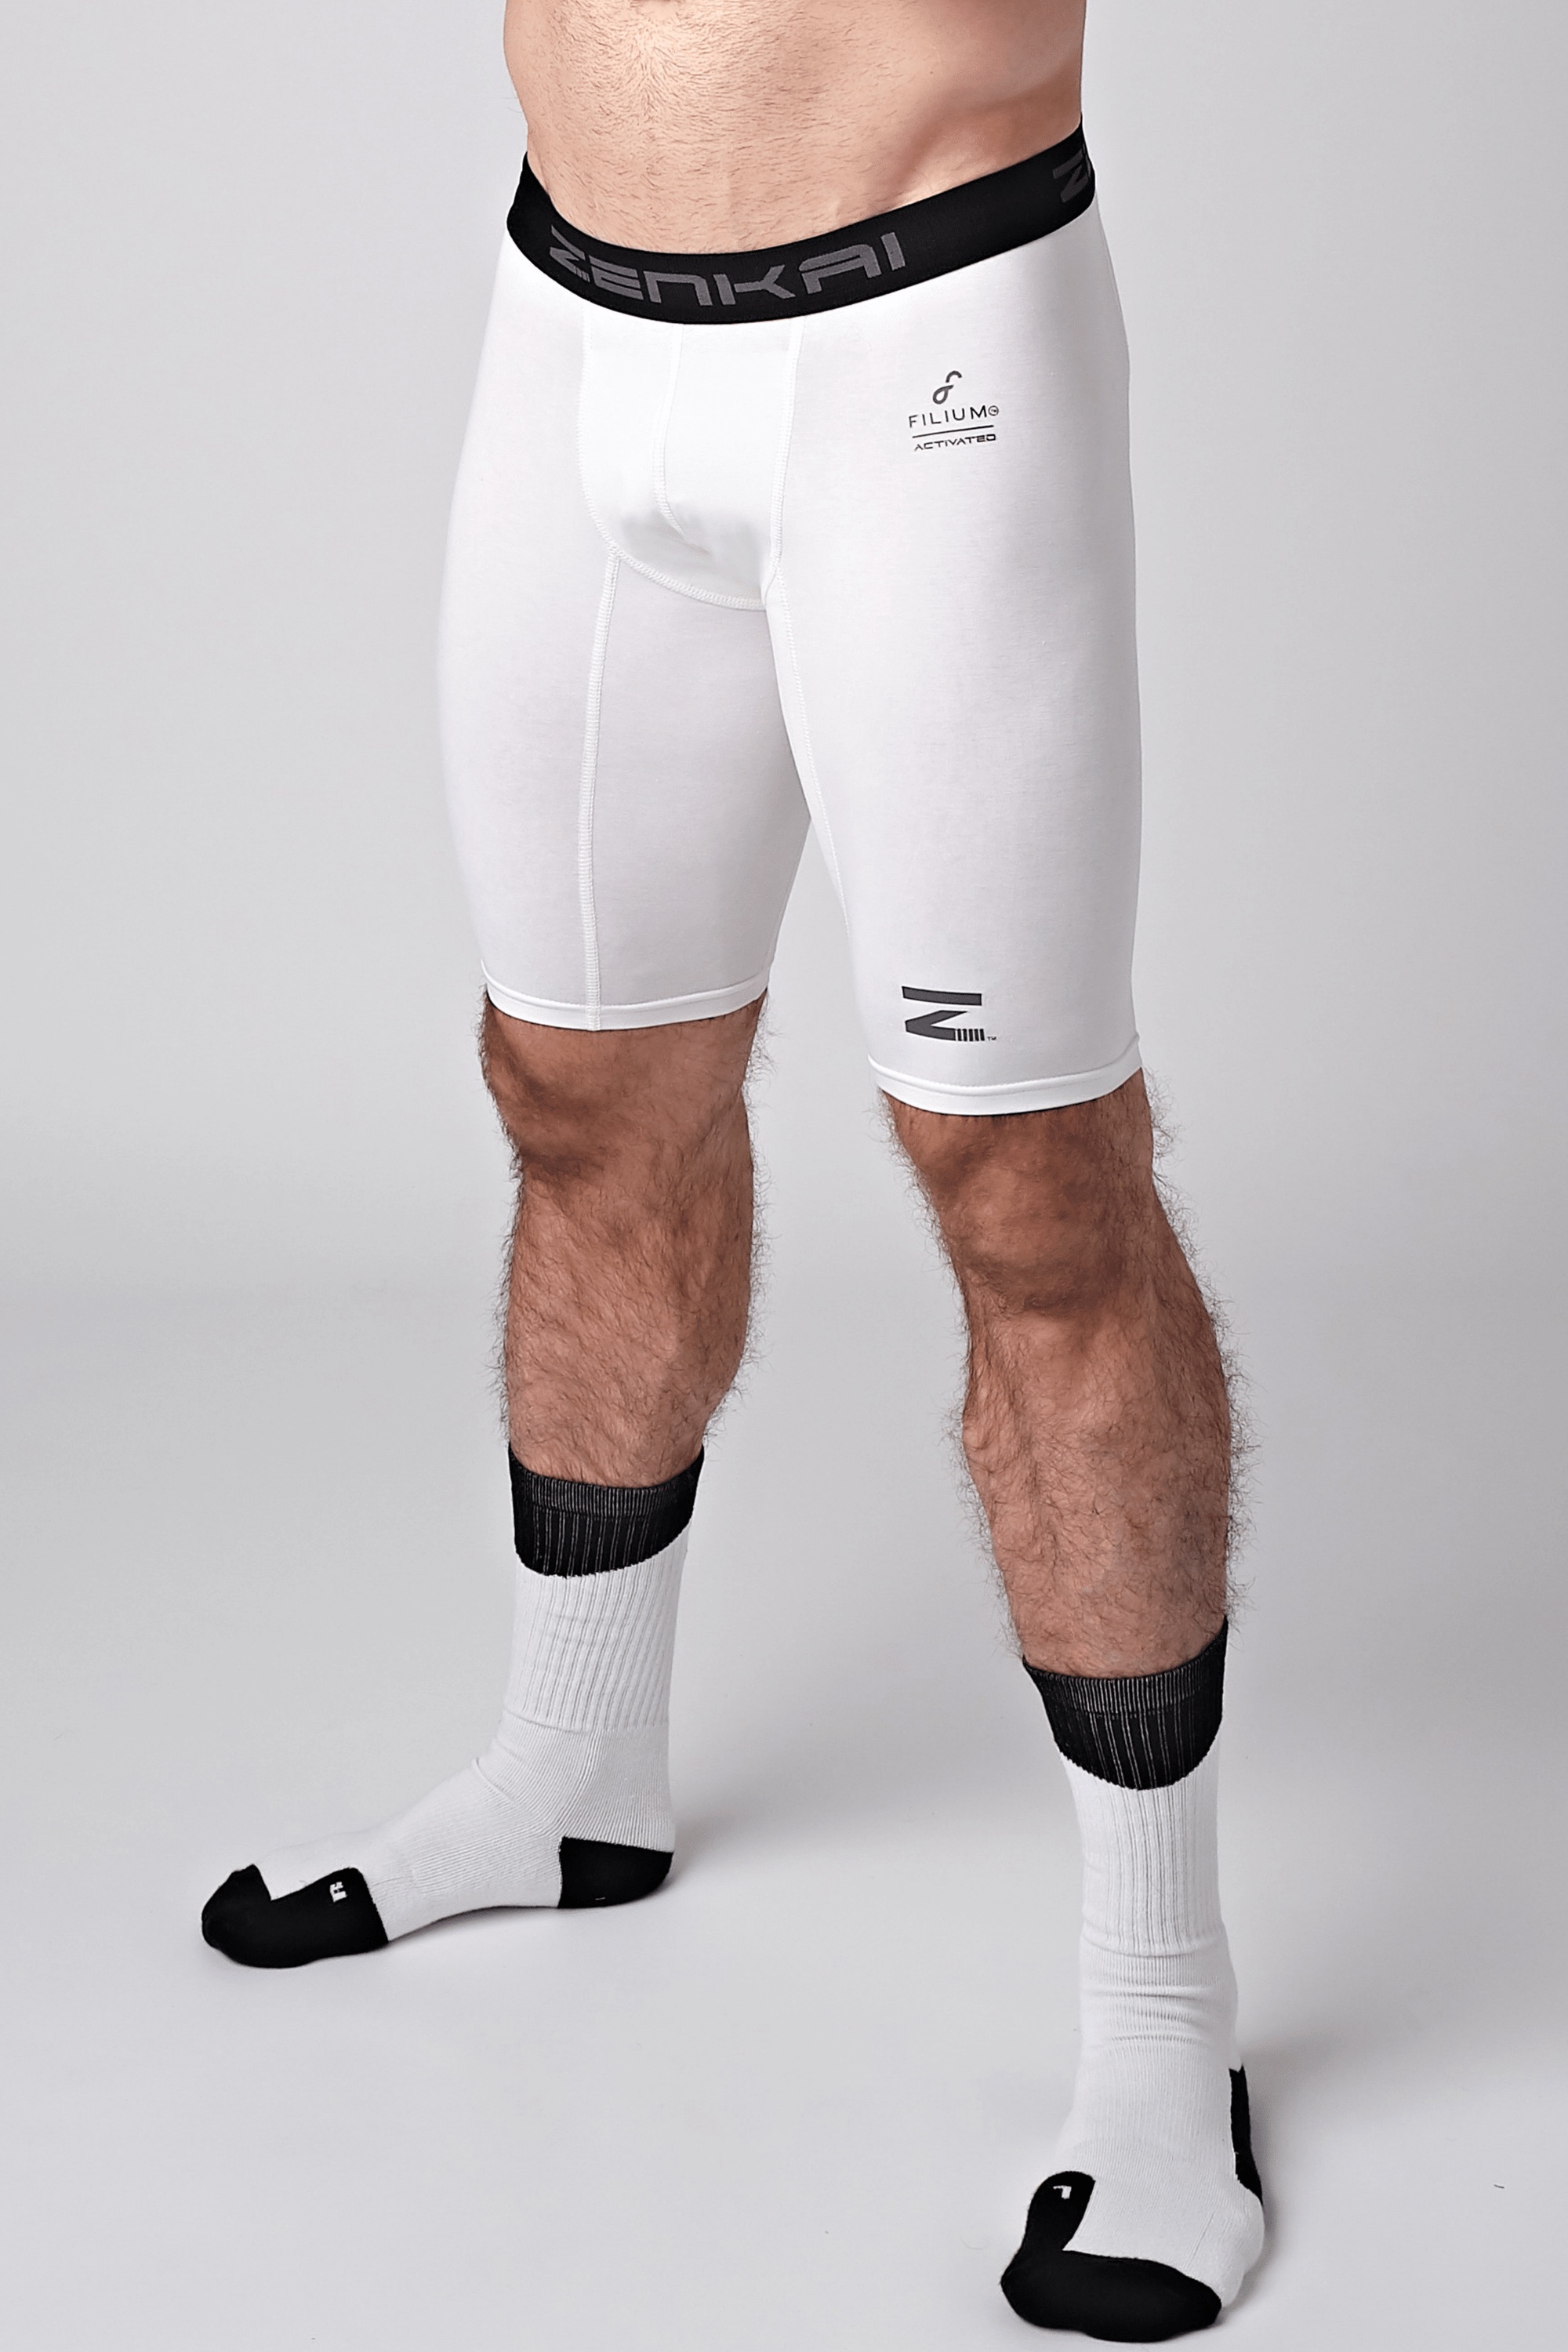 Men's Performance Compression Shorts